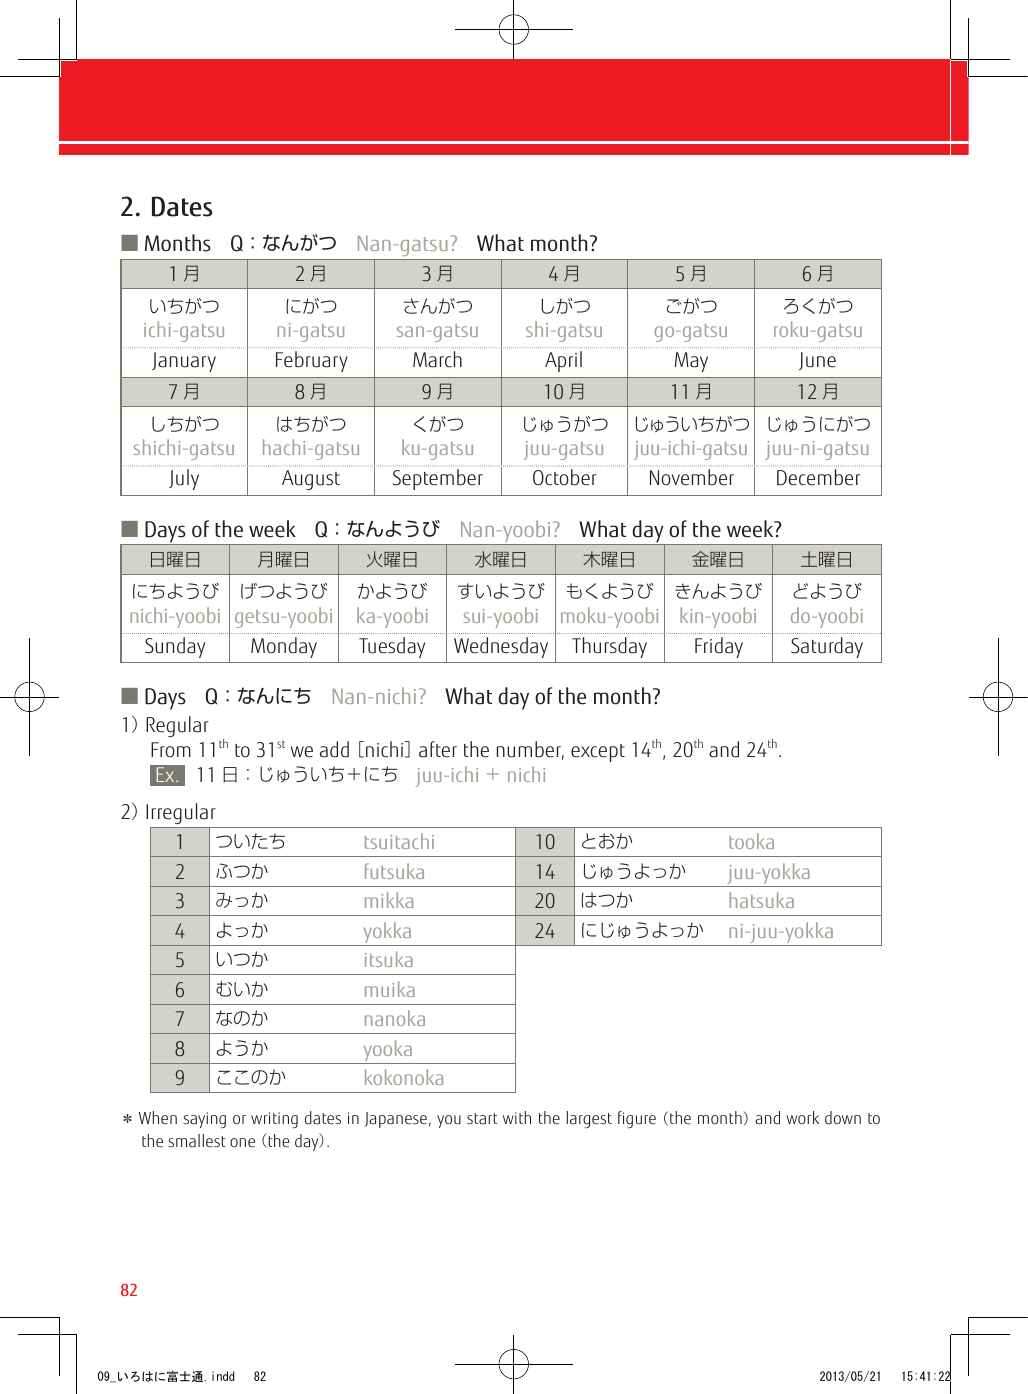 Page 2 of 11 - Fujitsu FUJITSU's Guide To Japanese Supplemental Items Build Vocabulary Sk-guidetojapanese-app-02-ww-en